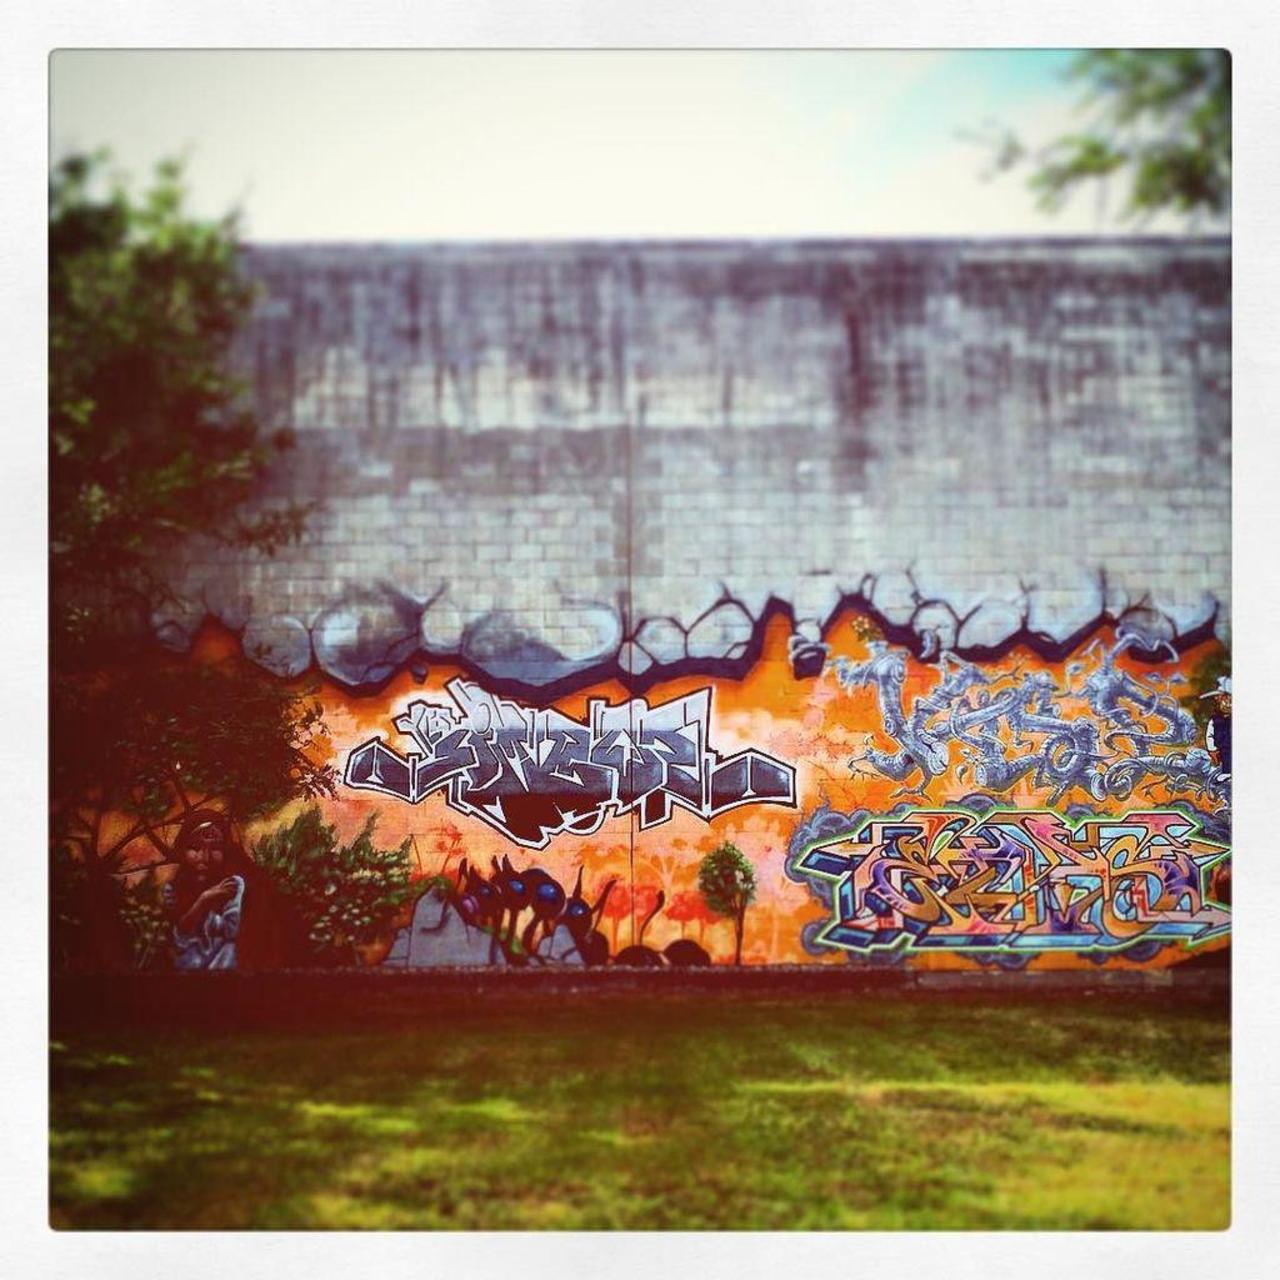 RT @artpushr: via #sarachristine33 "http://ift.tt/1iBVsgG" #graffiti #streetart http://t.co/Q2eZBB3lnL